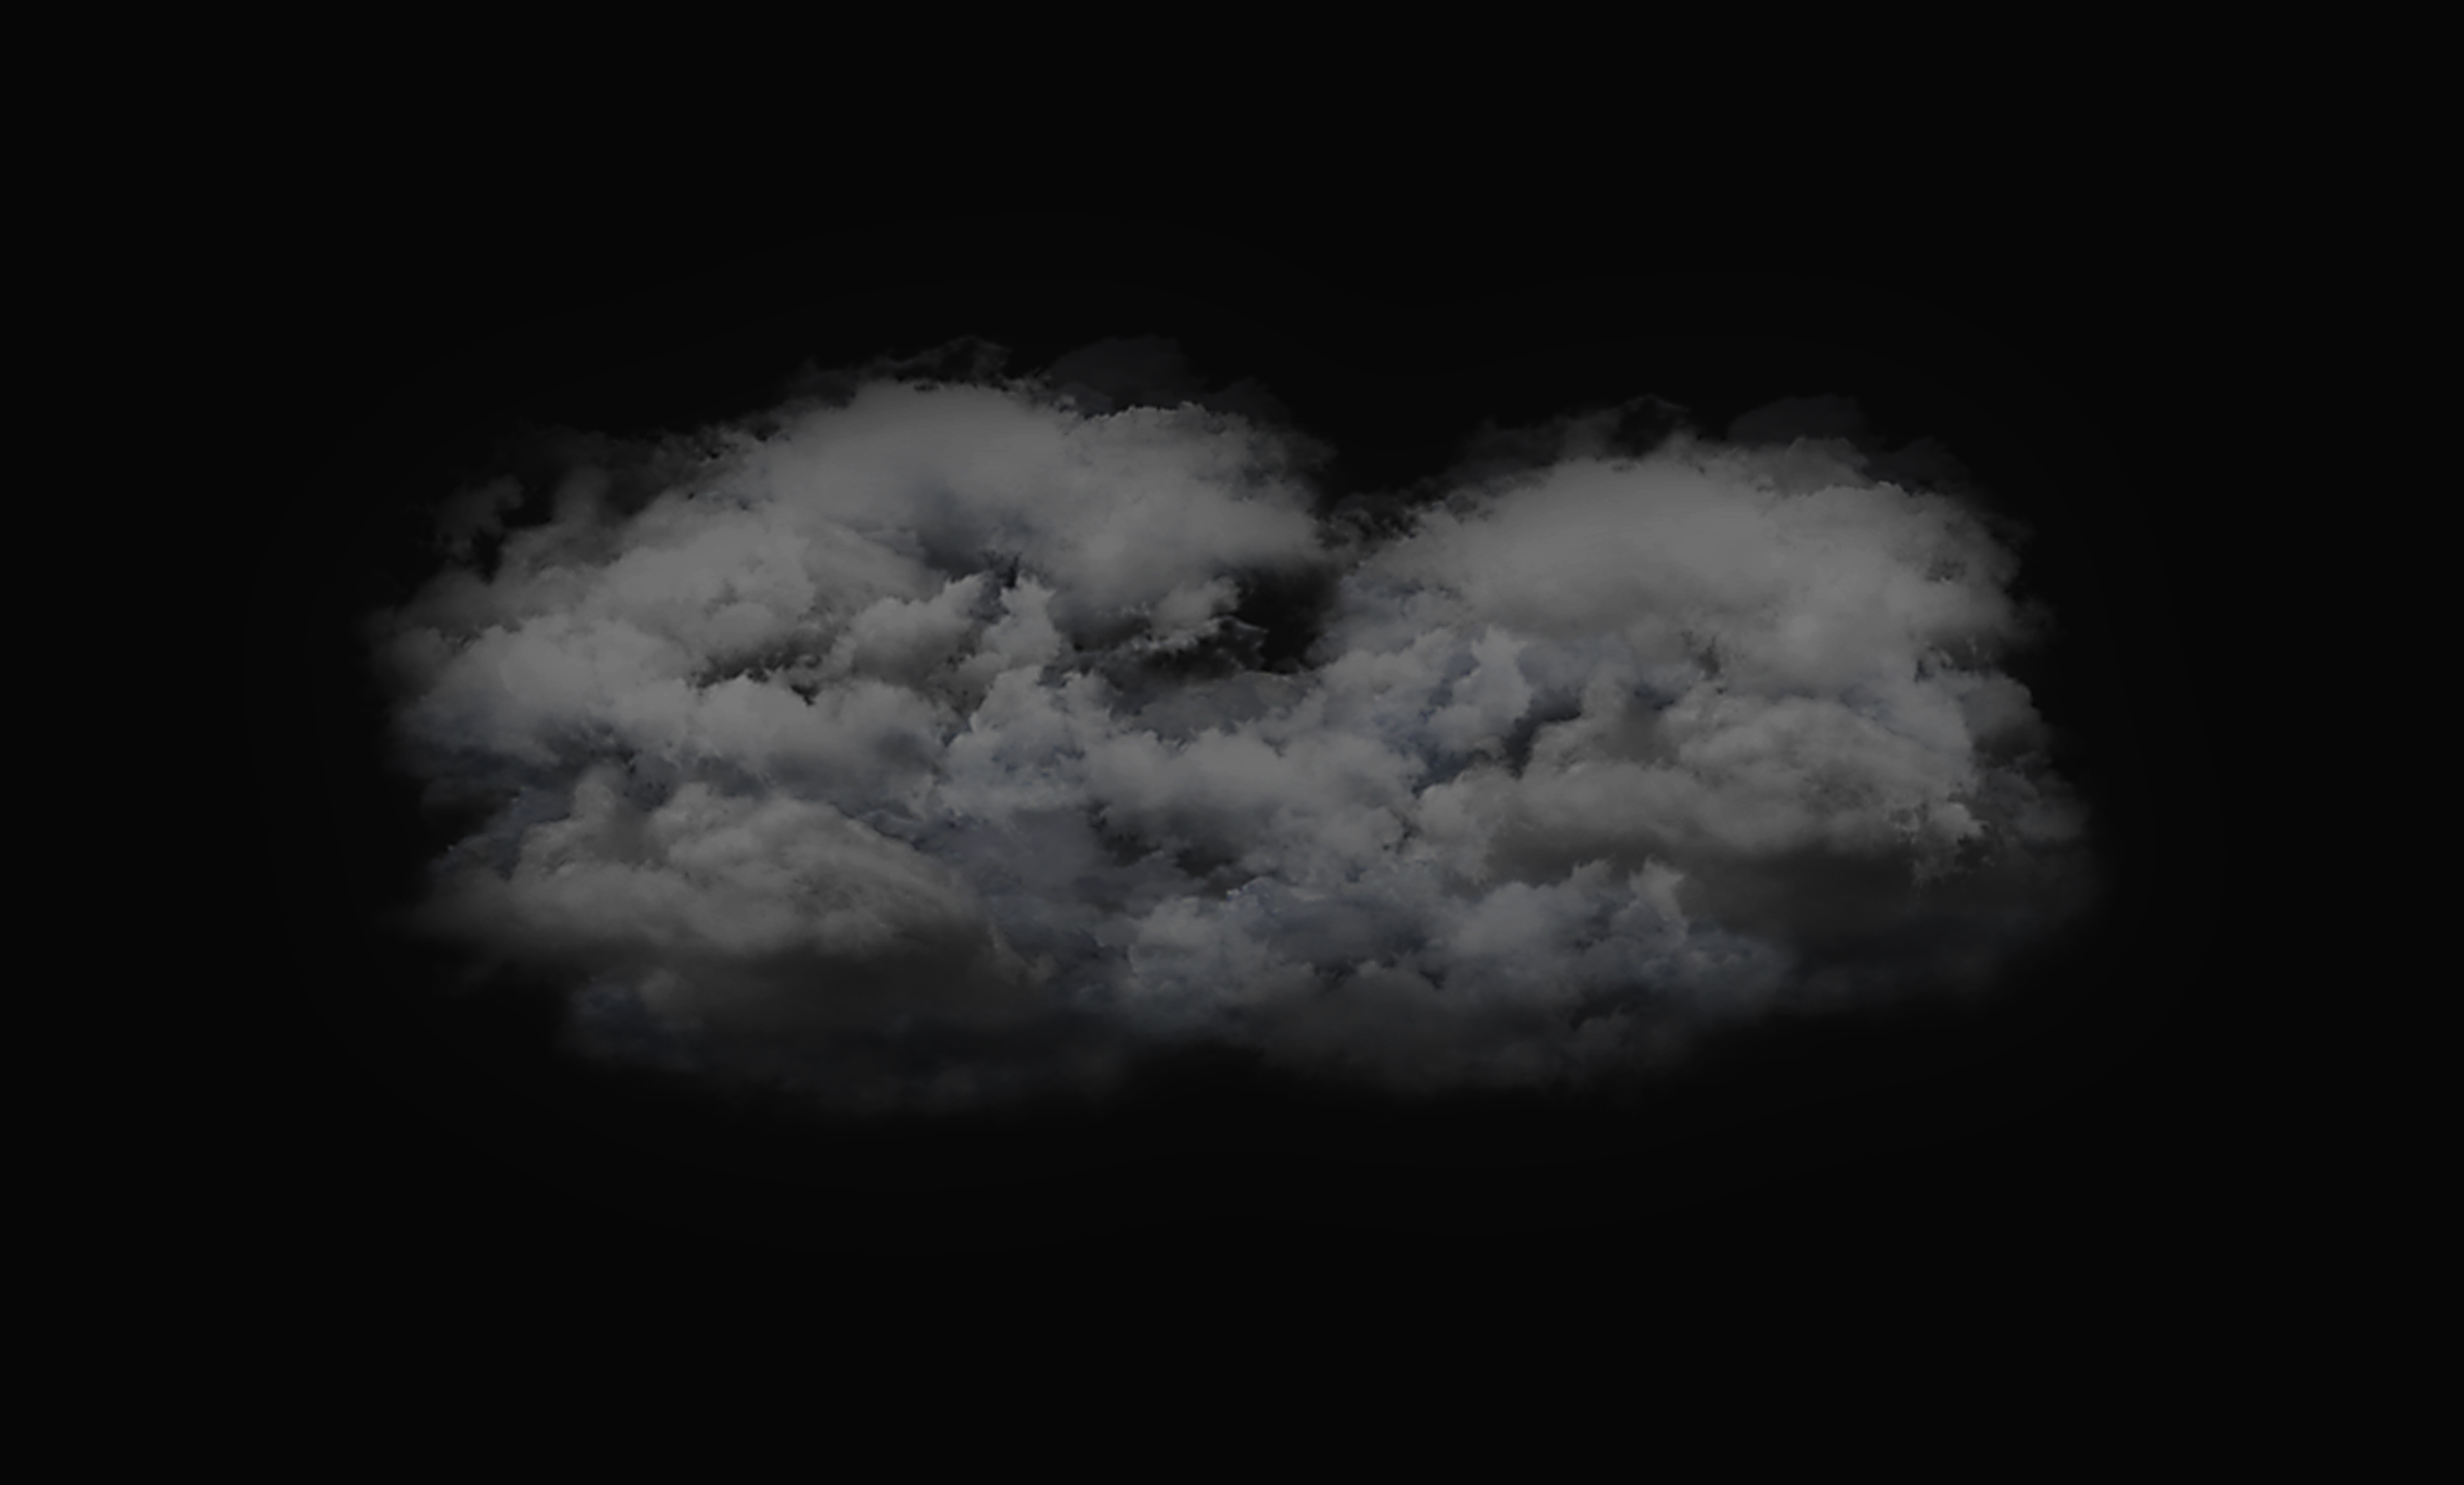 Ill.3: Alfredo Jaar, The Cloud, 2015, Approx. 600 x 600 x 100 cm, plaster, bandages, ballons, polyester fibre. © Alfredo Jaar